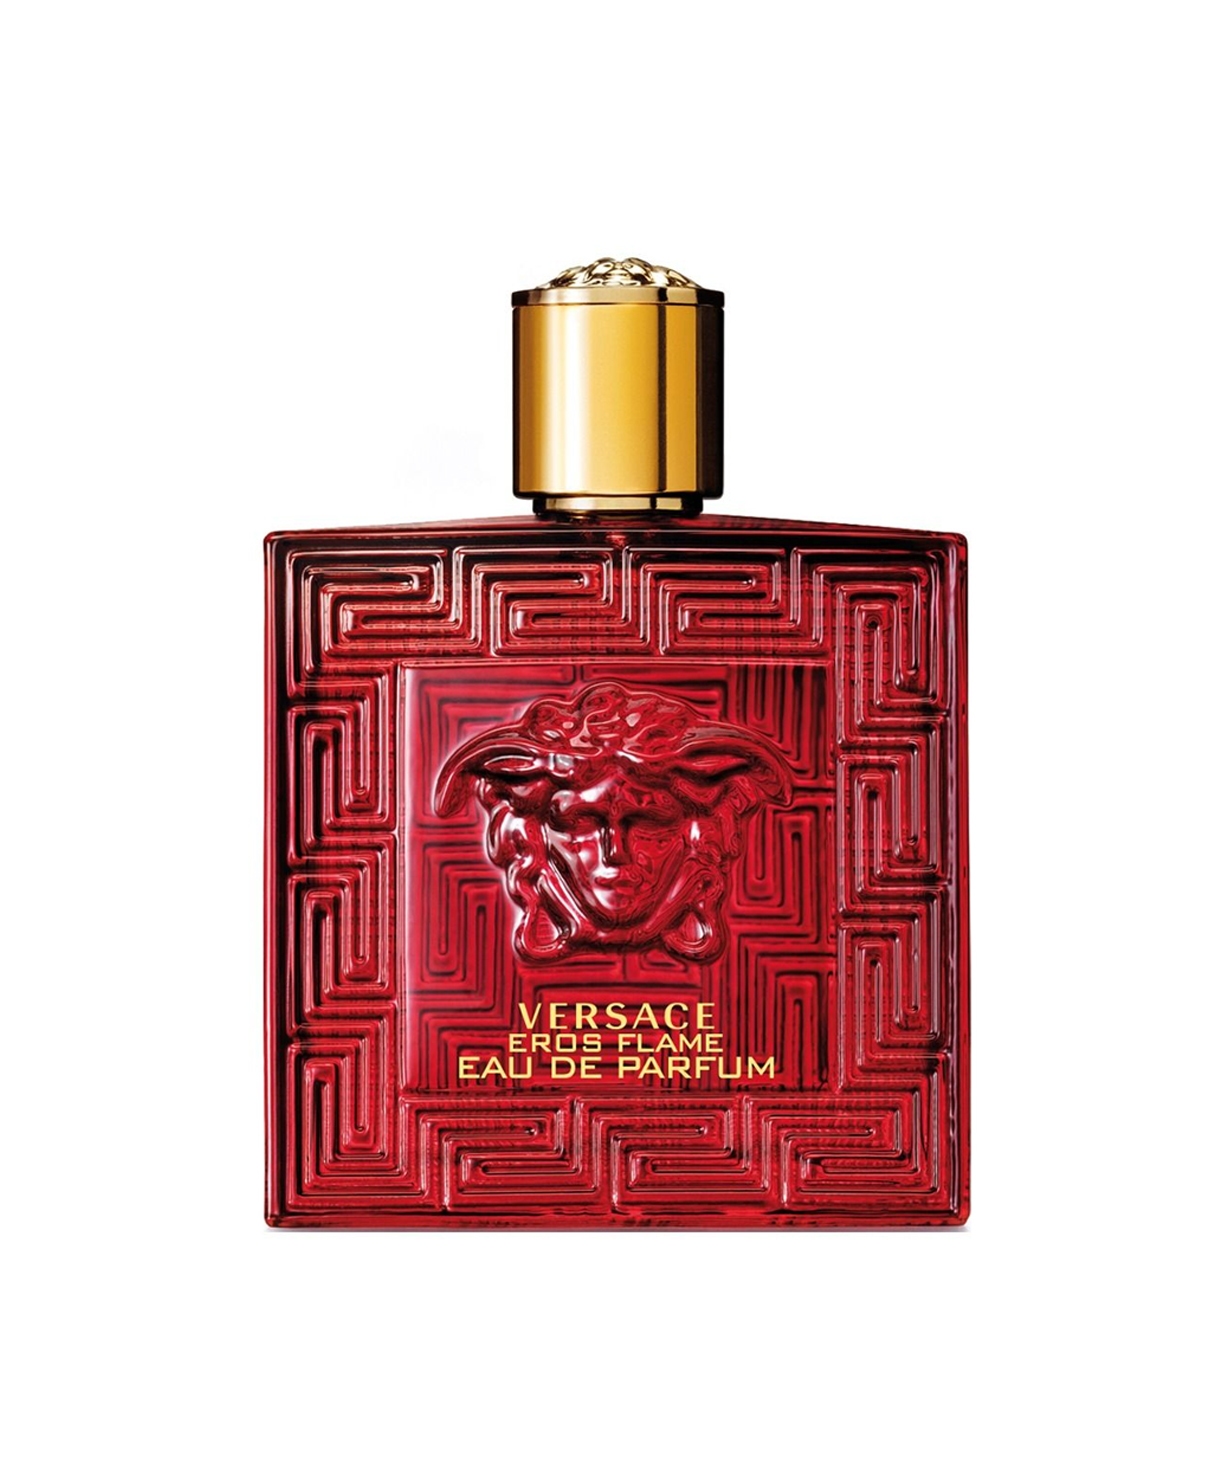 Perfume «Versace» Eros Flame, for men, 100 ml